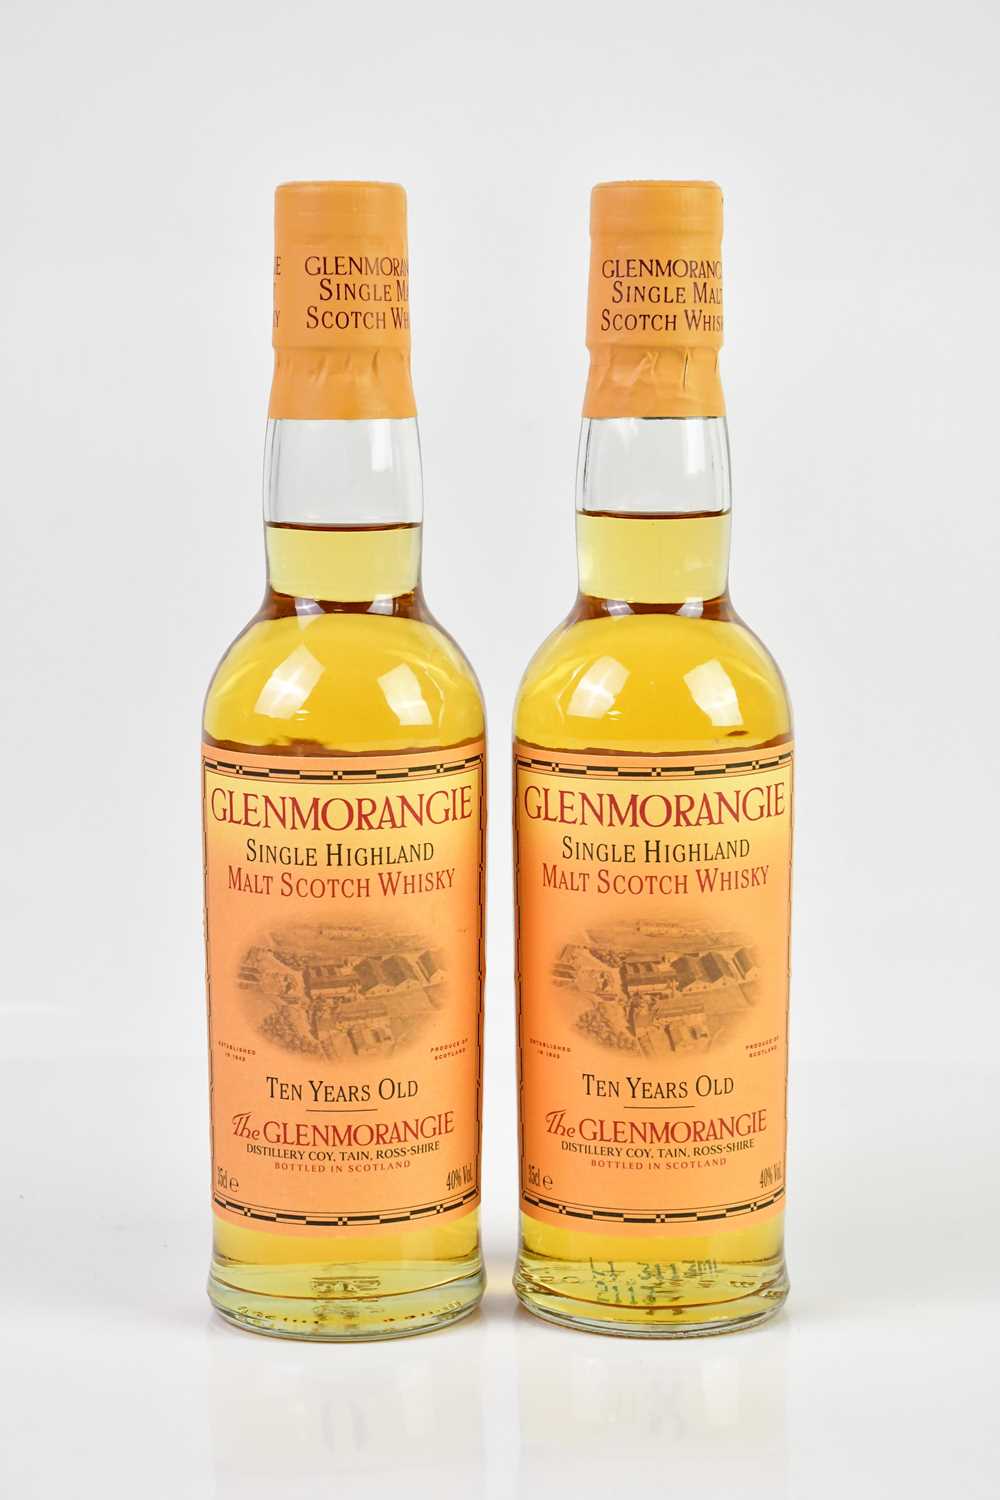 WHISKY; two bottles of Glenmorangie Single Highland Malt Scotch whisky, 10 years old, 40%, 35cl.